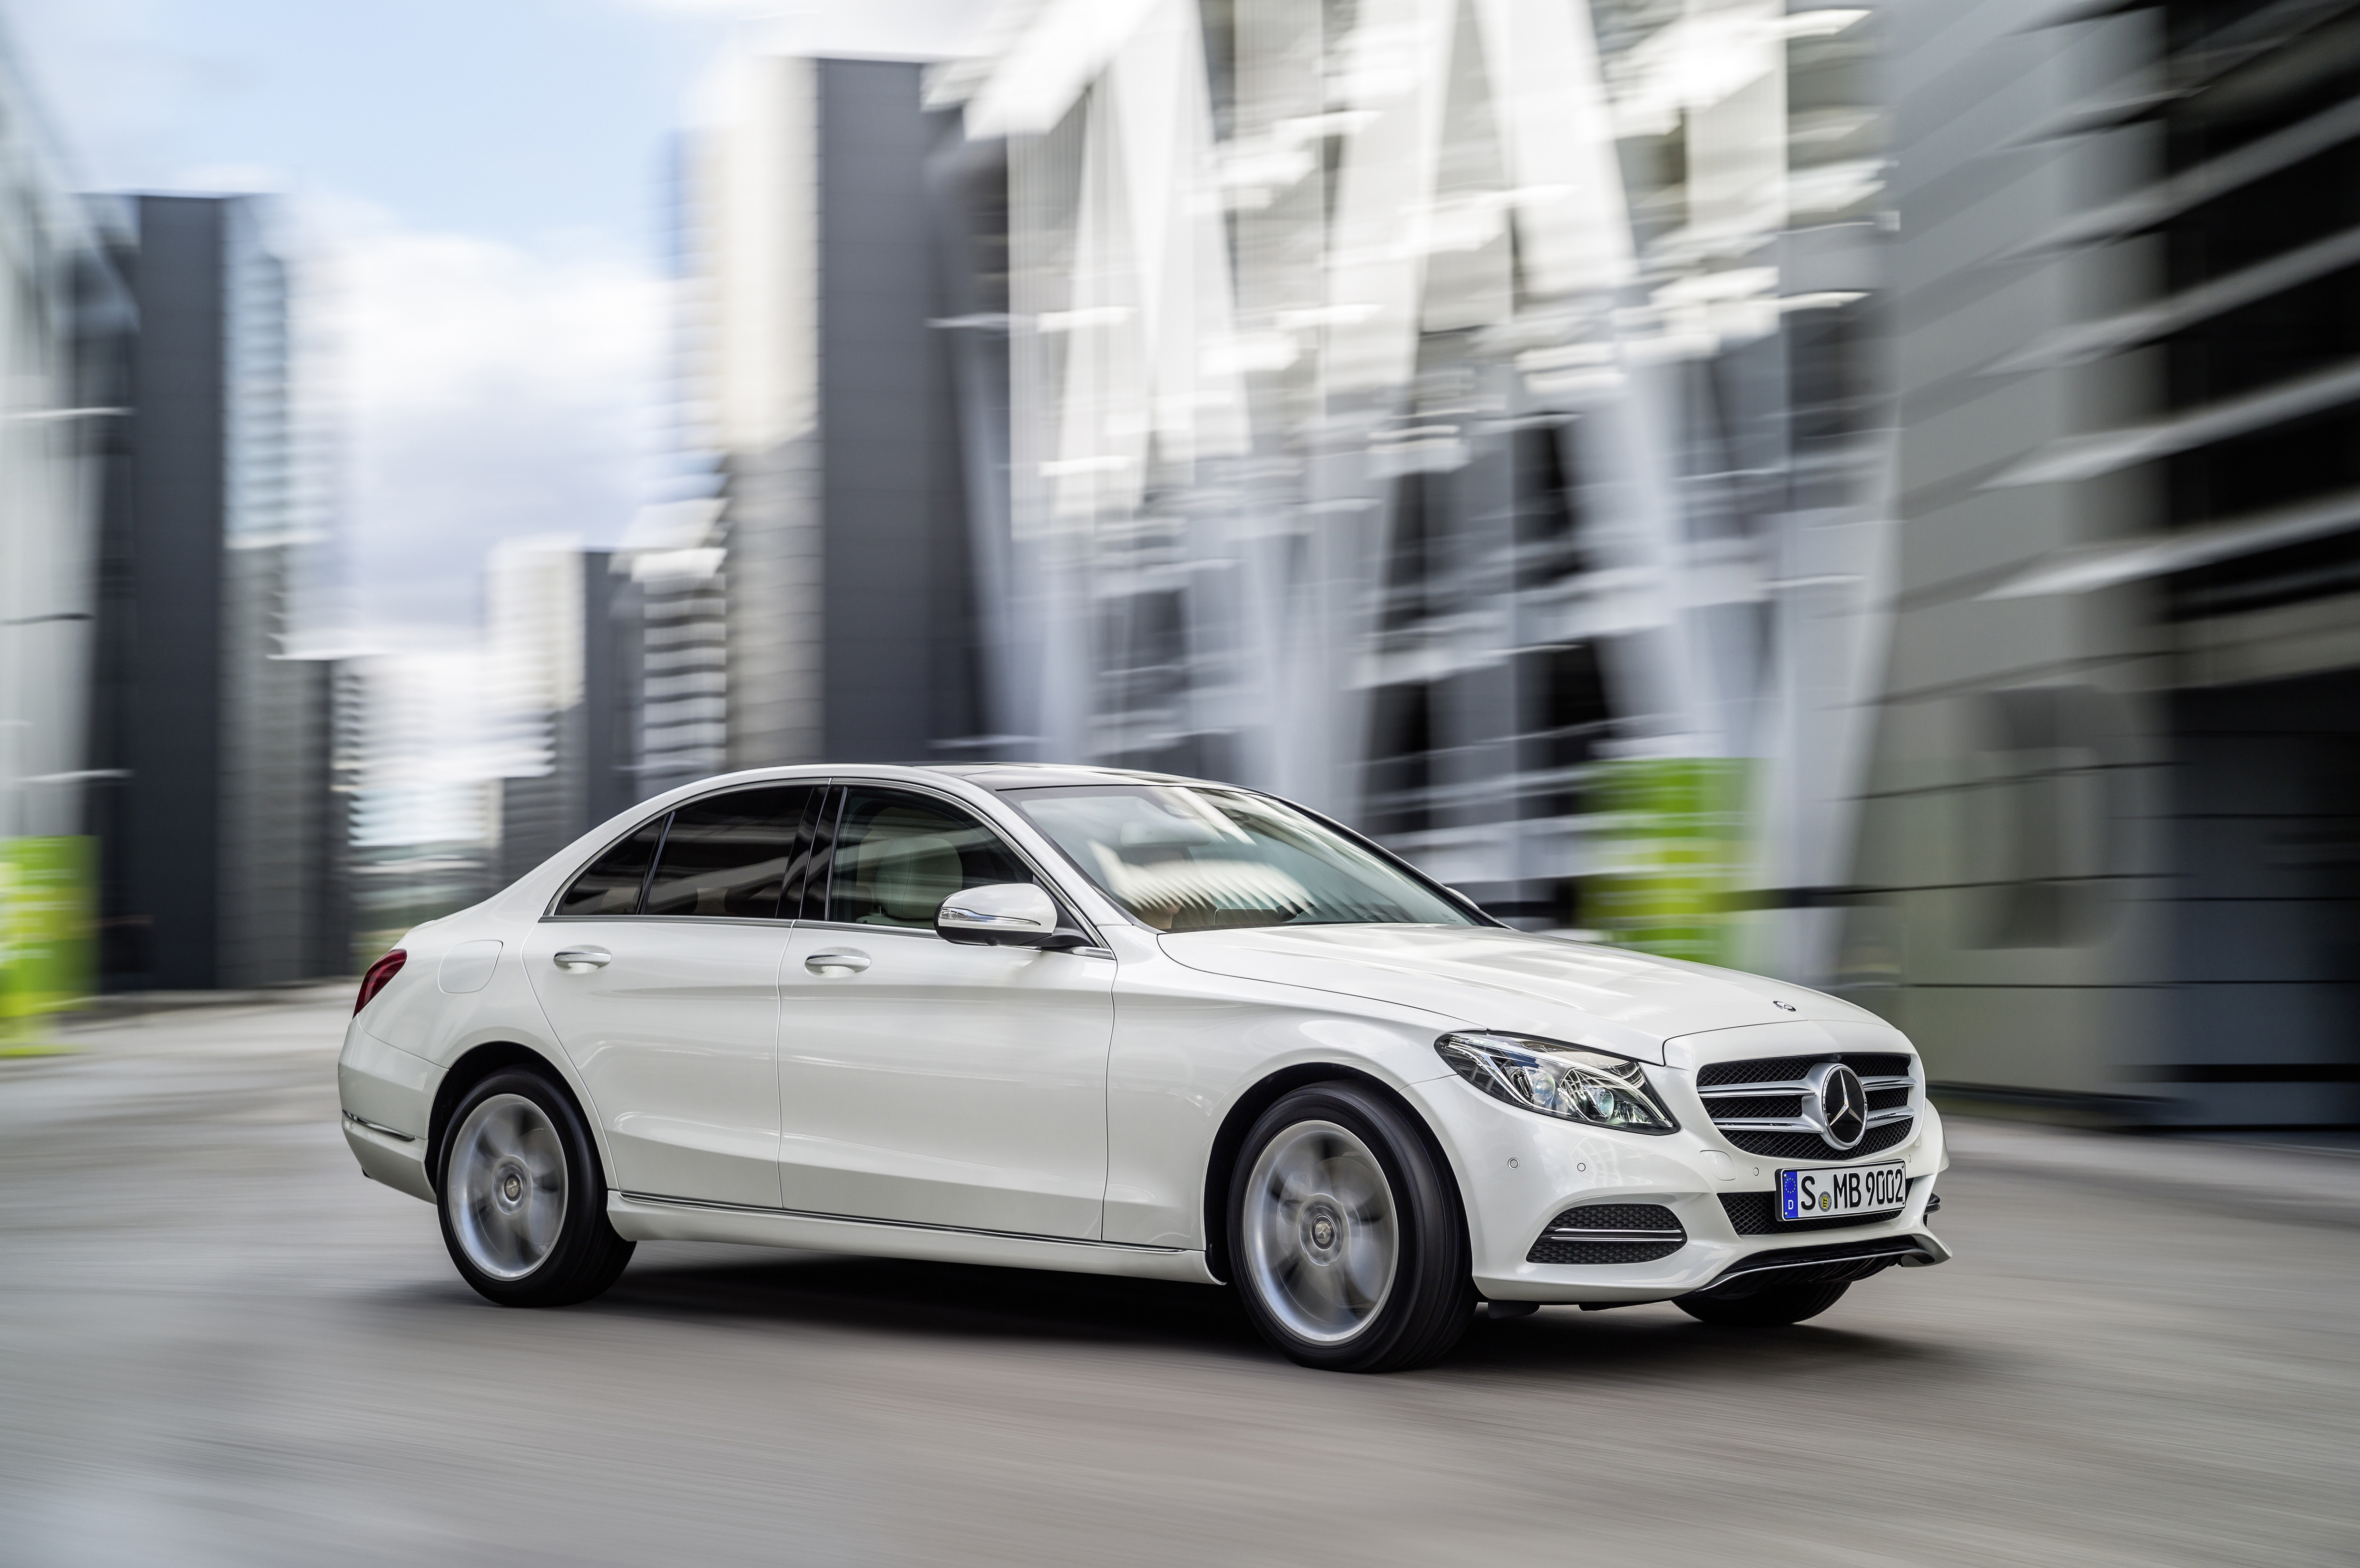 Мерседесе клас. Mercedes-Benz c-class 2015. Mercedes-Benz c-class 2014. Mercedes Benz c klasse 2014. Мерседес Бенц ц класс 2015 года.